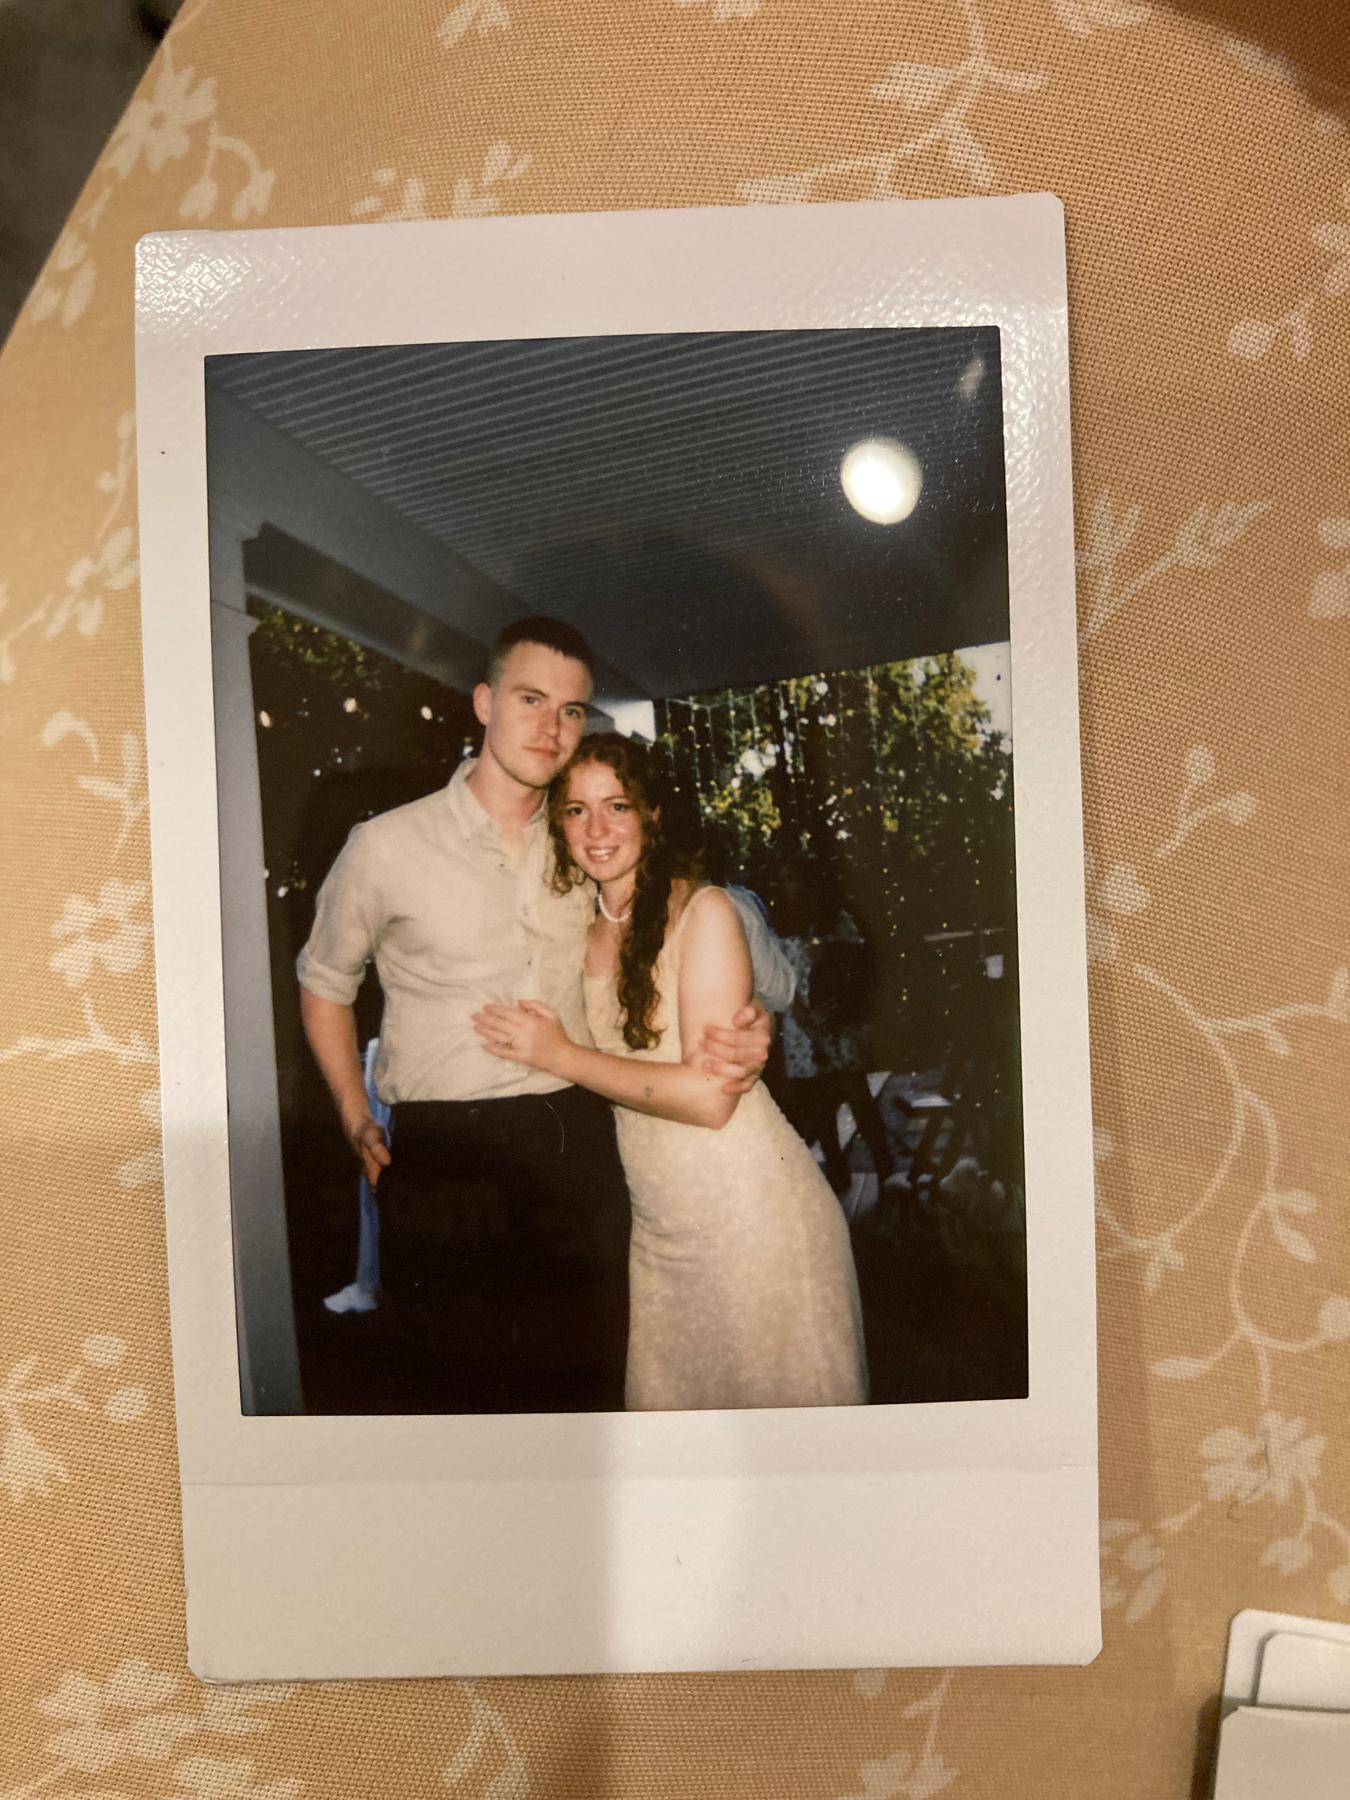 At Lauren and Sam’s wedding